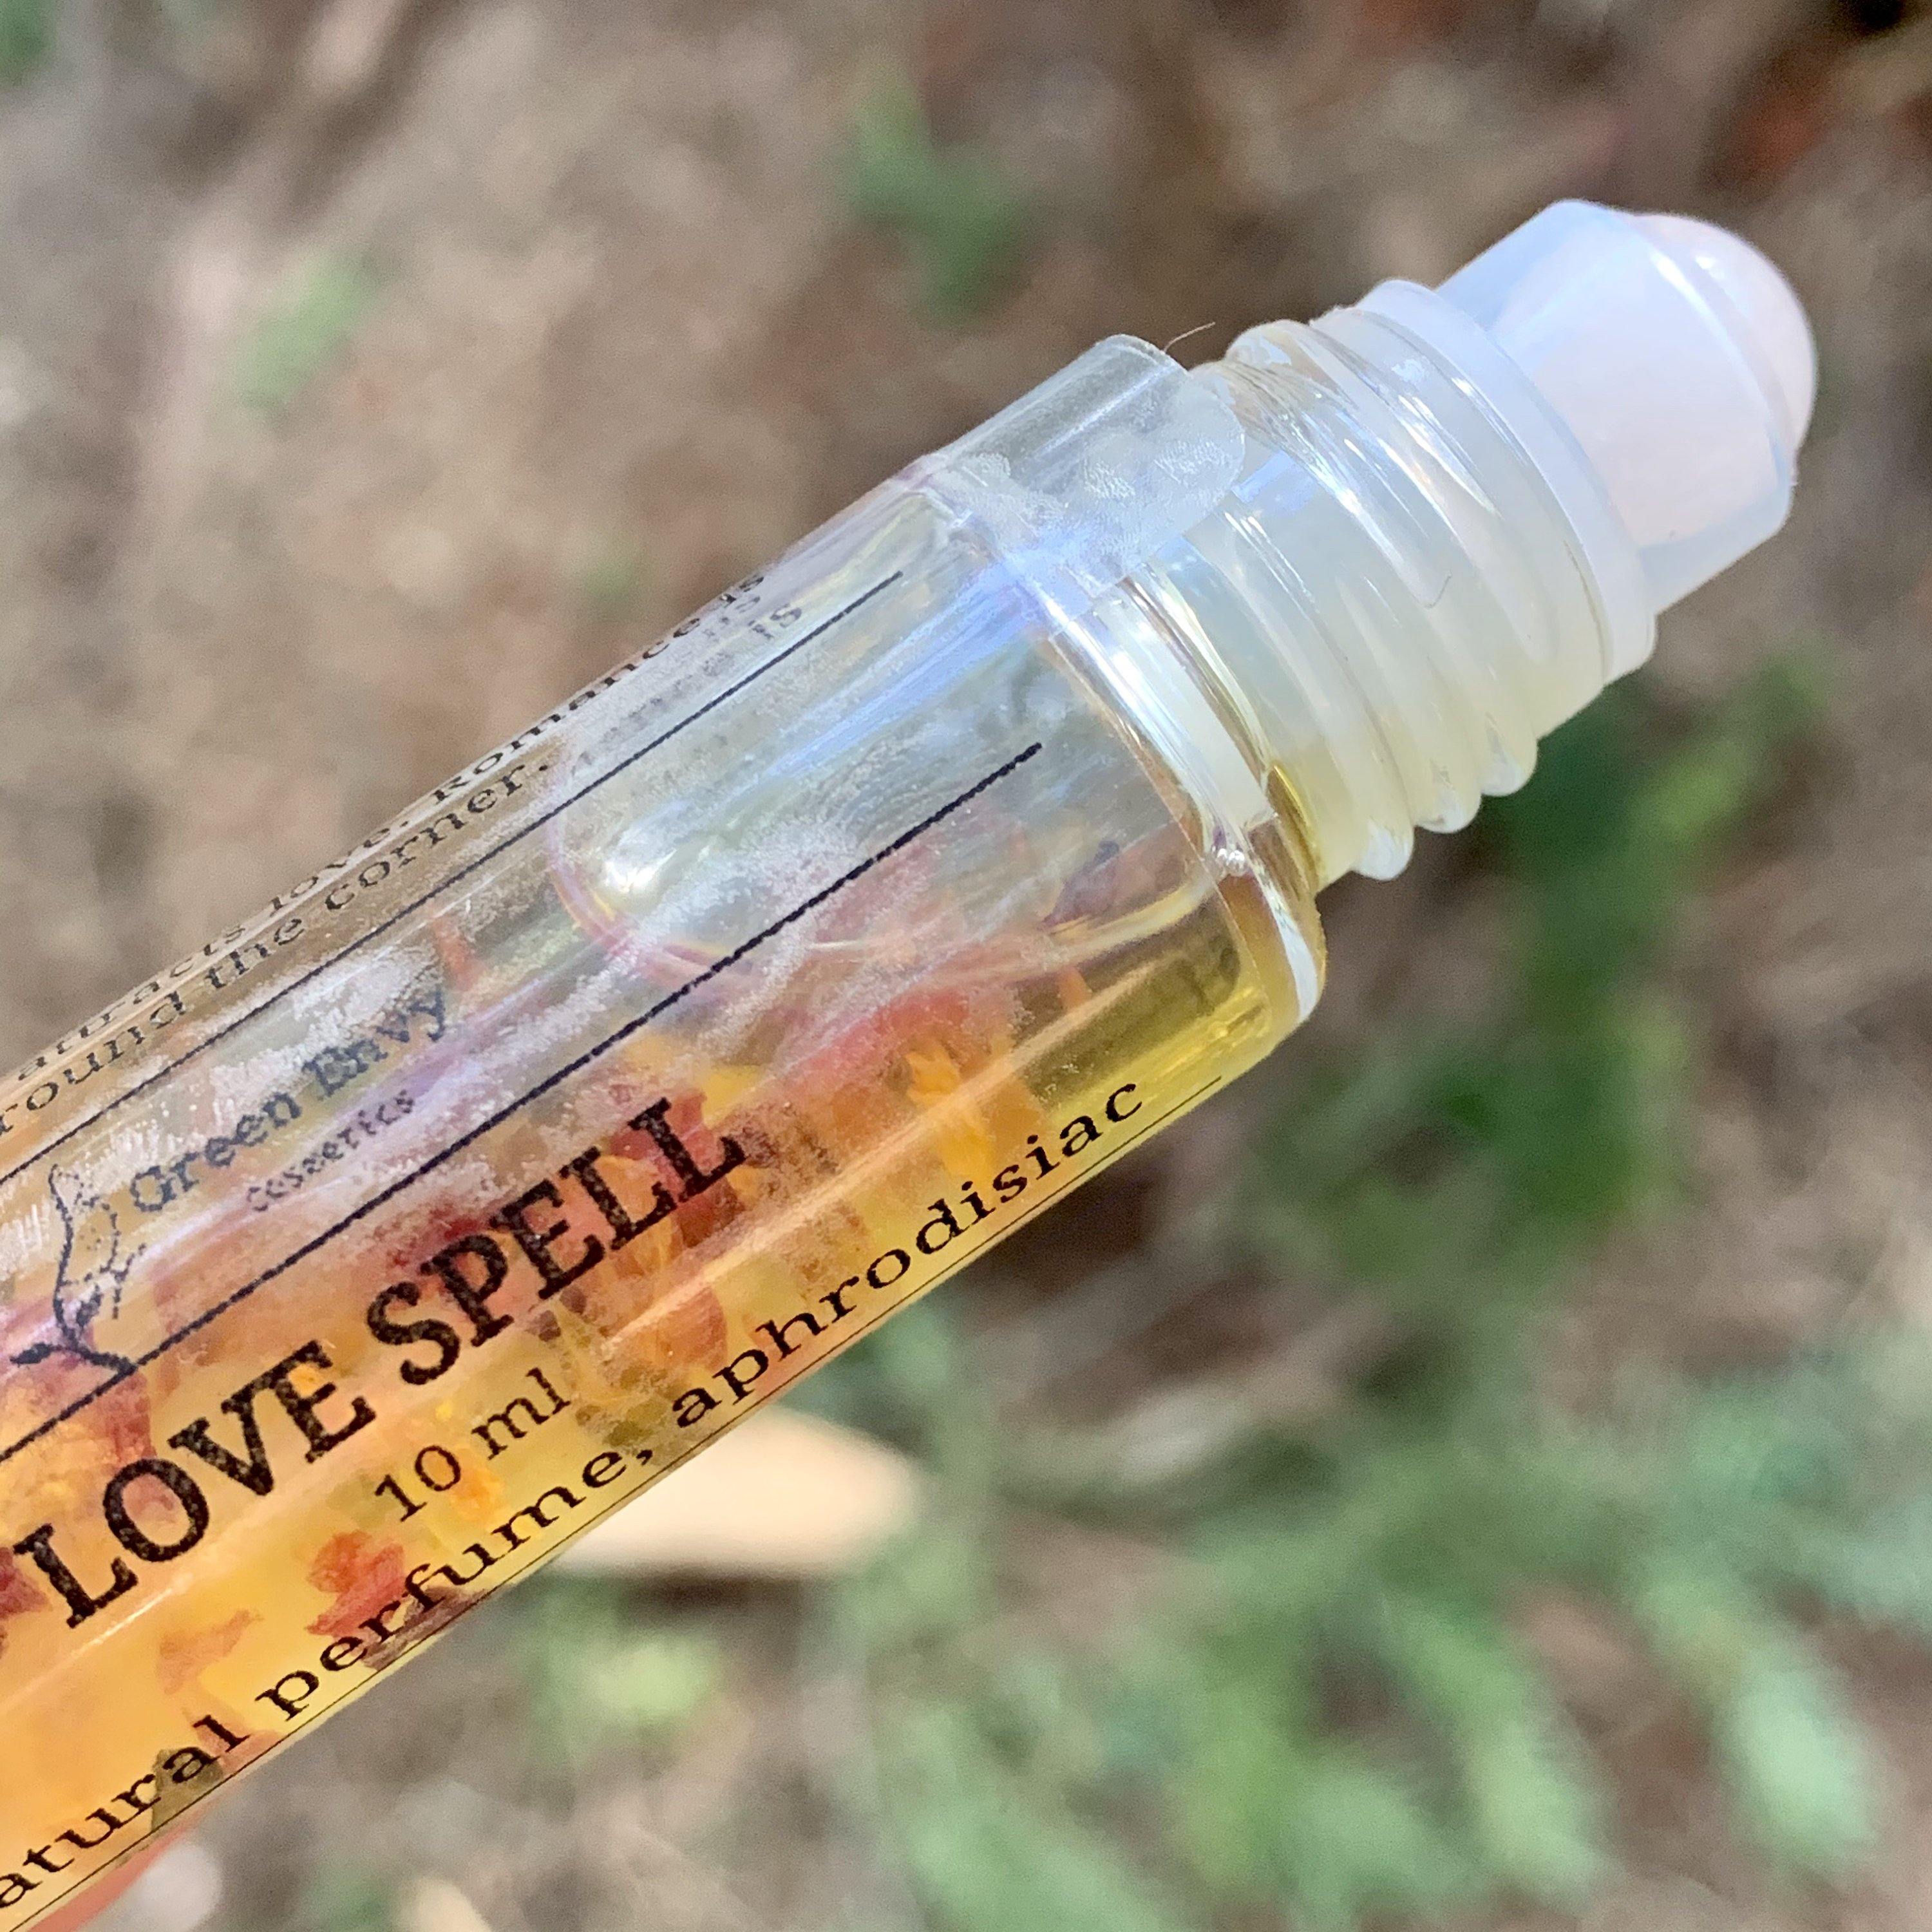 LOVE SPELL- ROSE QUARTZ ROLL ON OIL PERFUME – GreenEnvyCosmetics